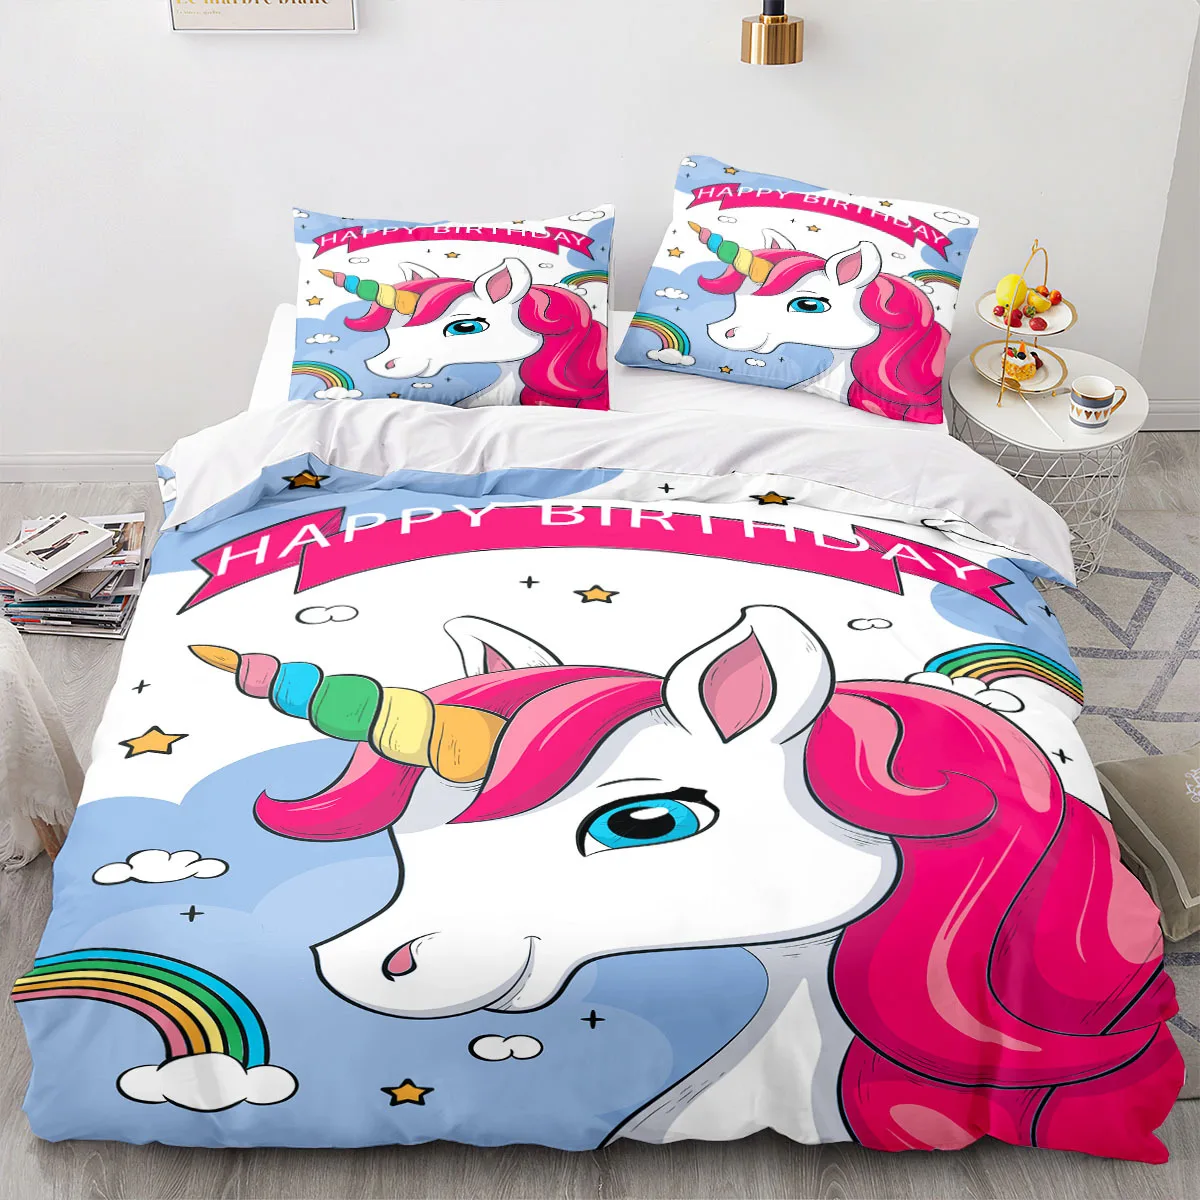 Unicorn Duvet Cover Cartoon Rainbow Colorful Unicorn Cute Bedding Set Romantic Theme for Kids Girls Polyester Comforter Cover